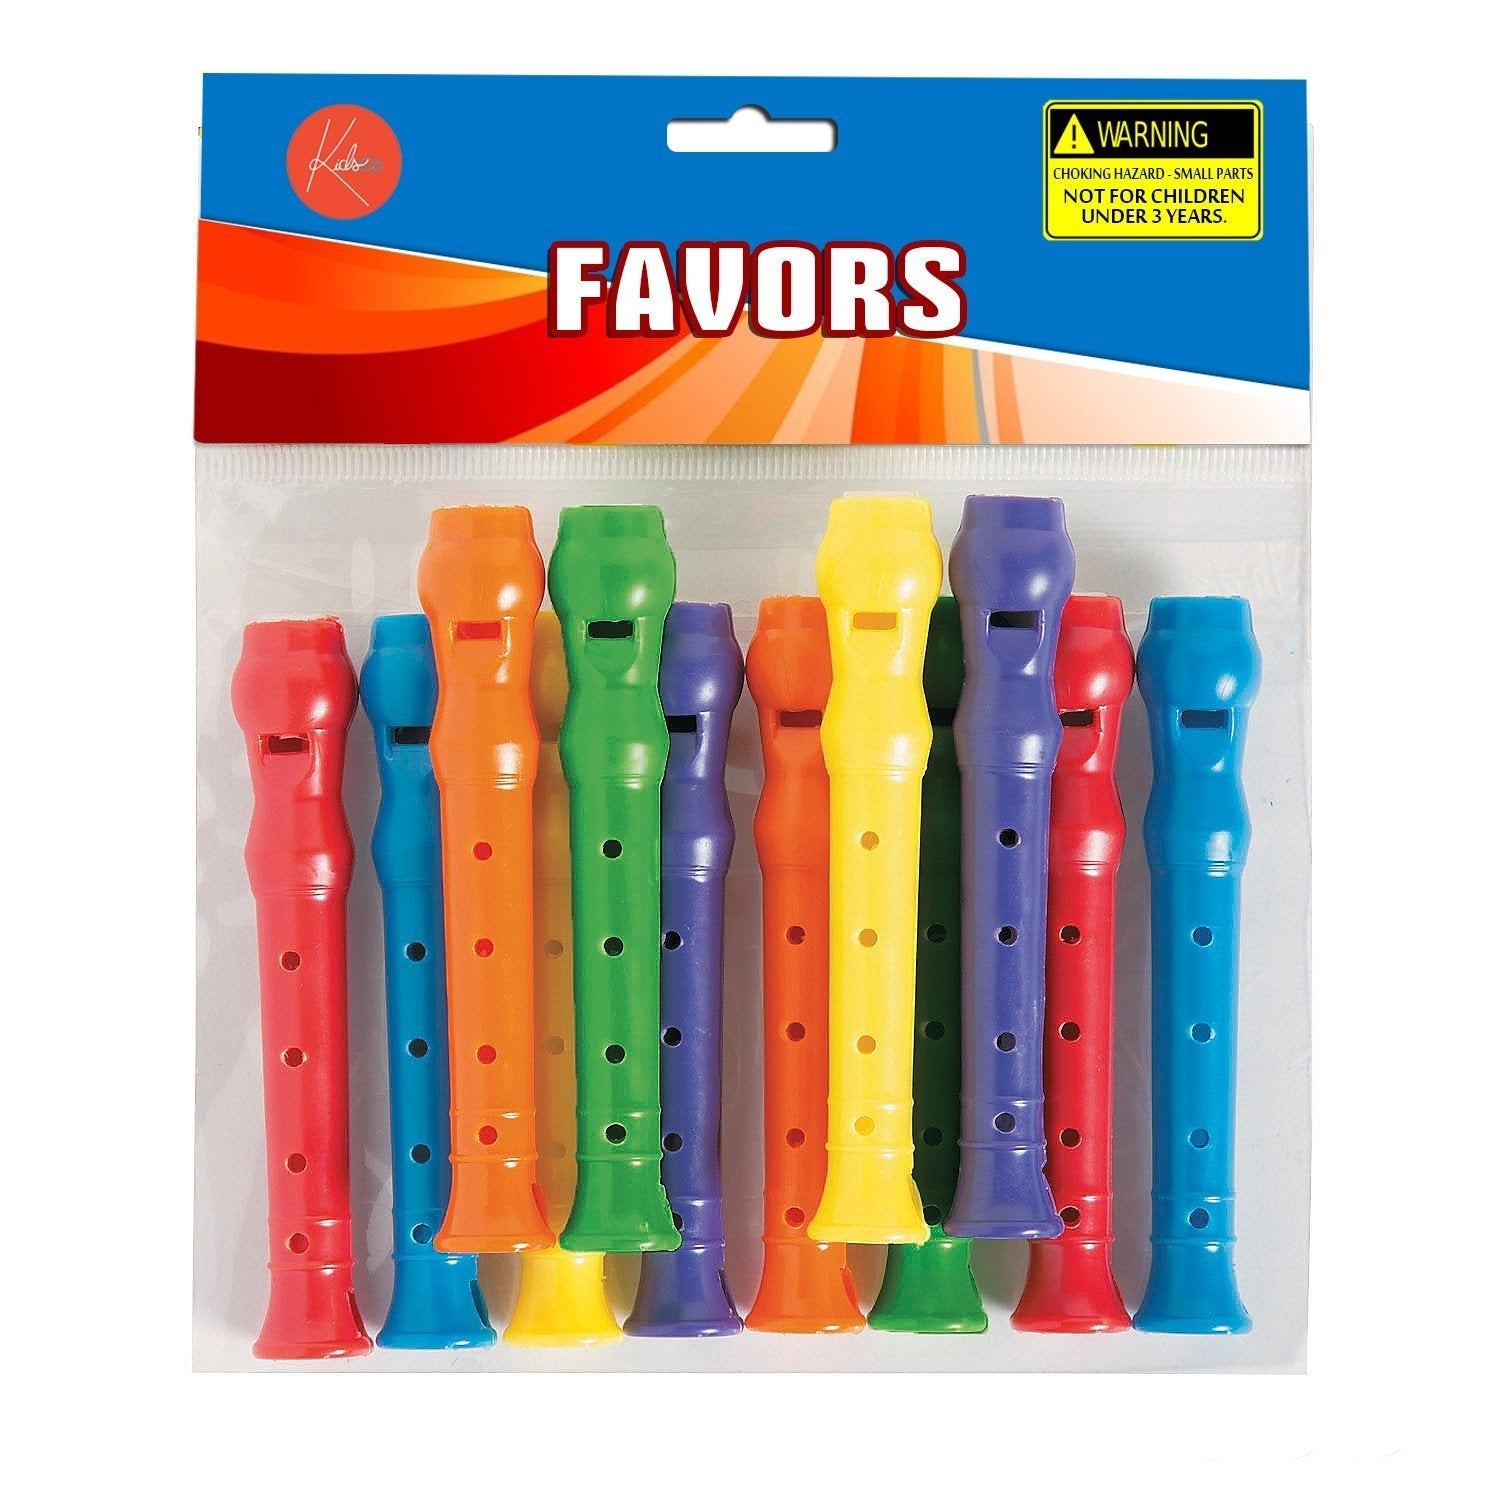 plastic instruments for kids